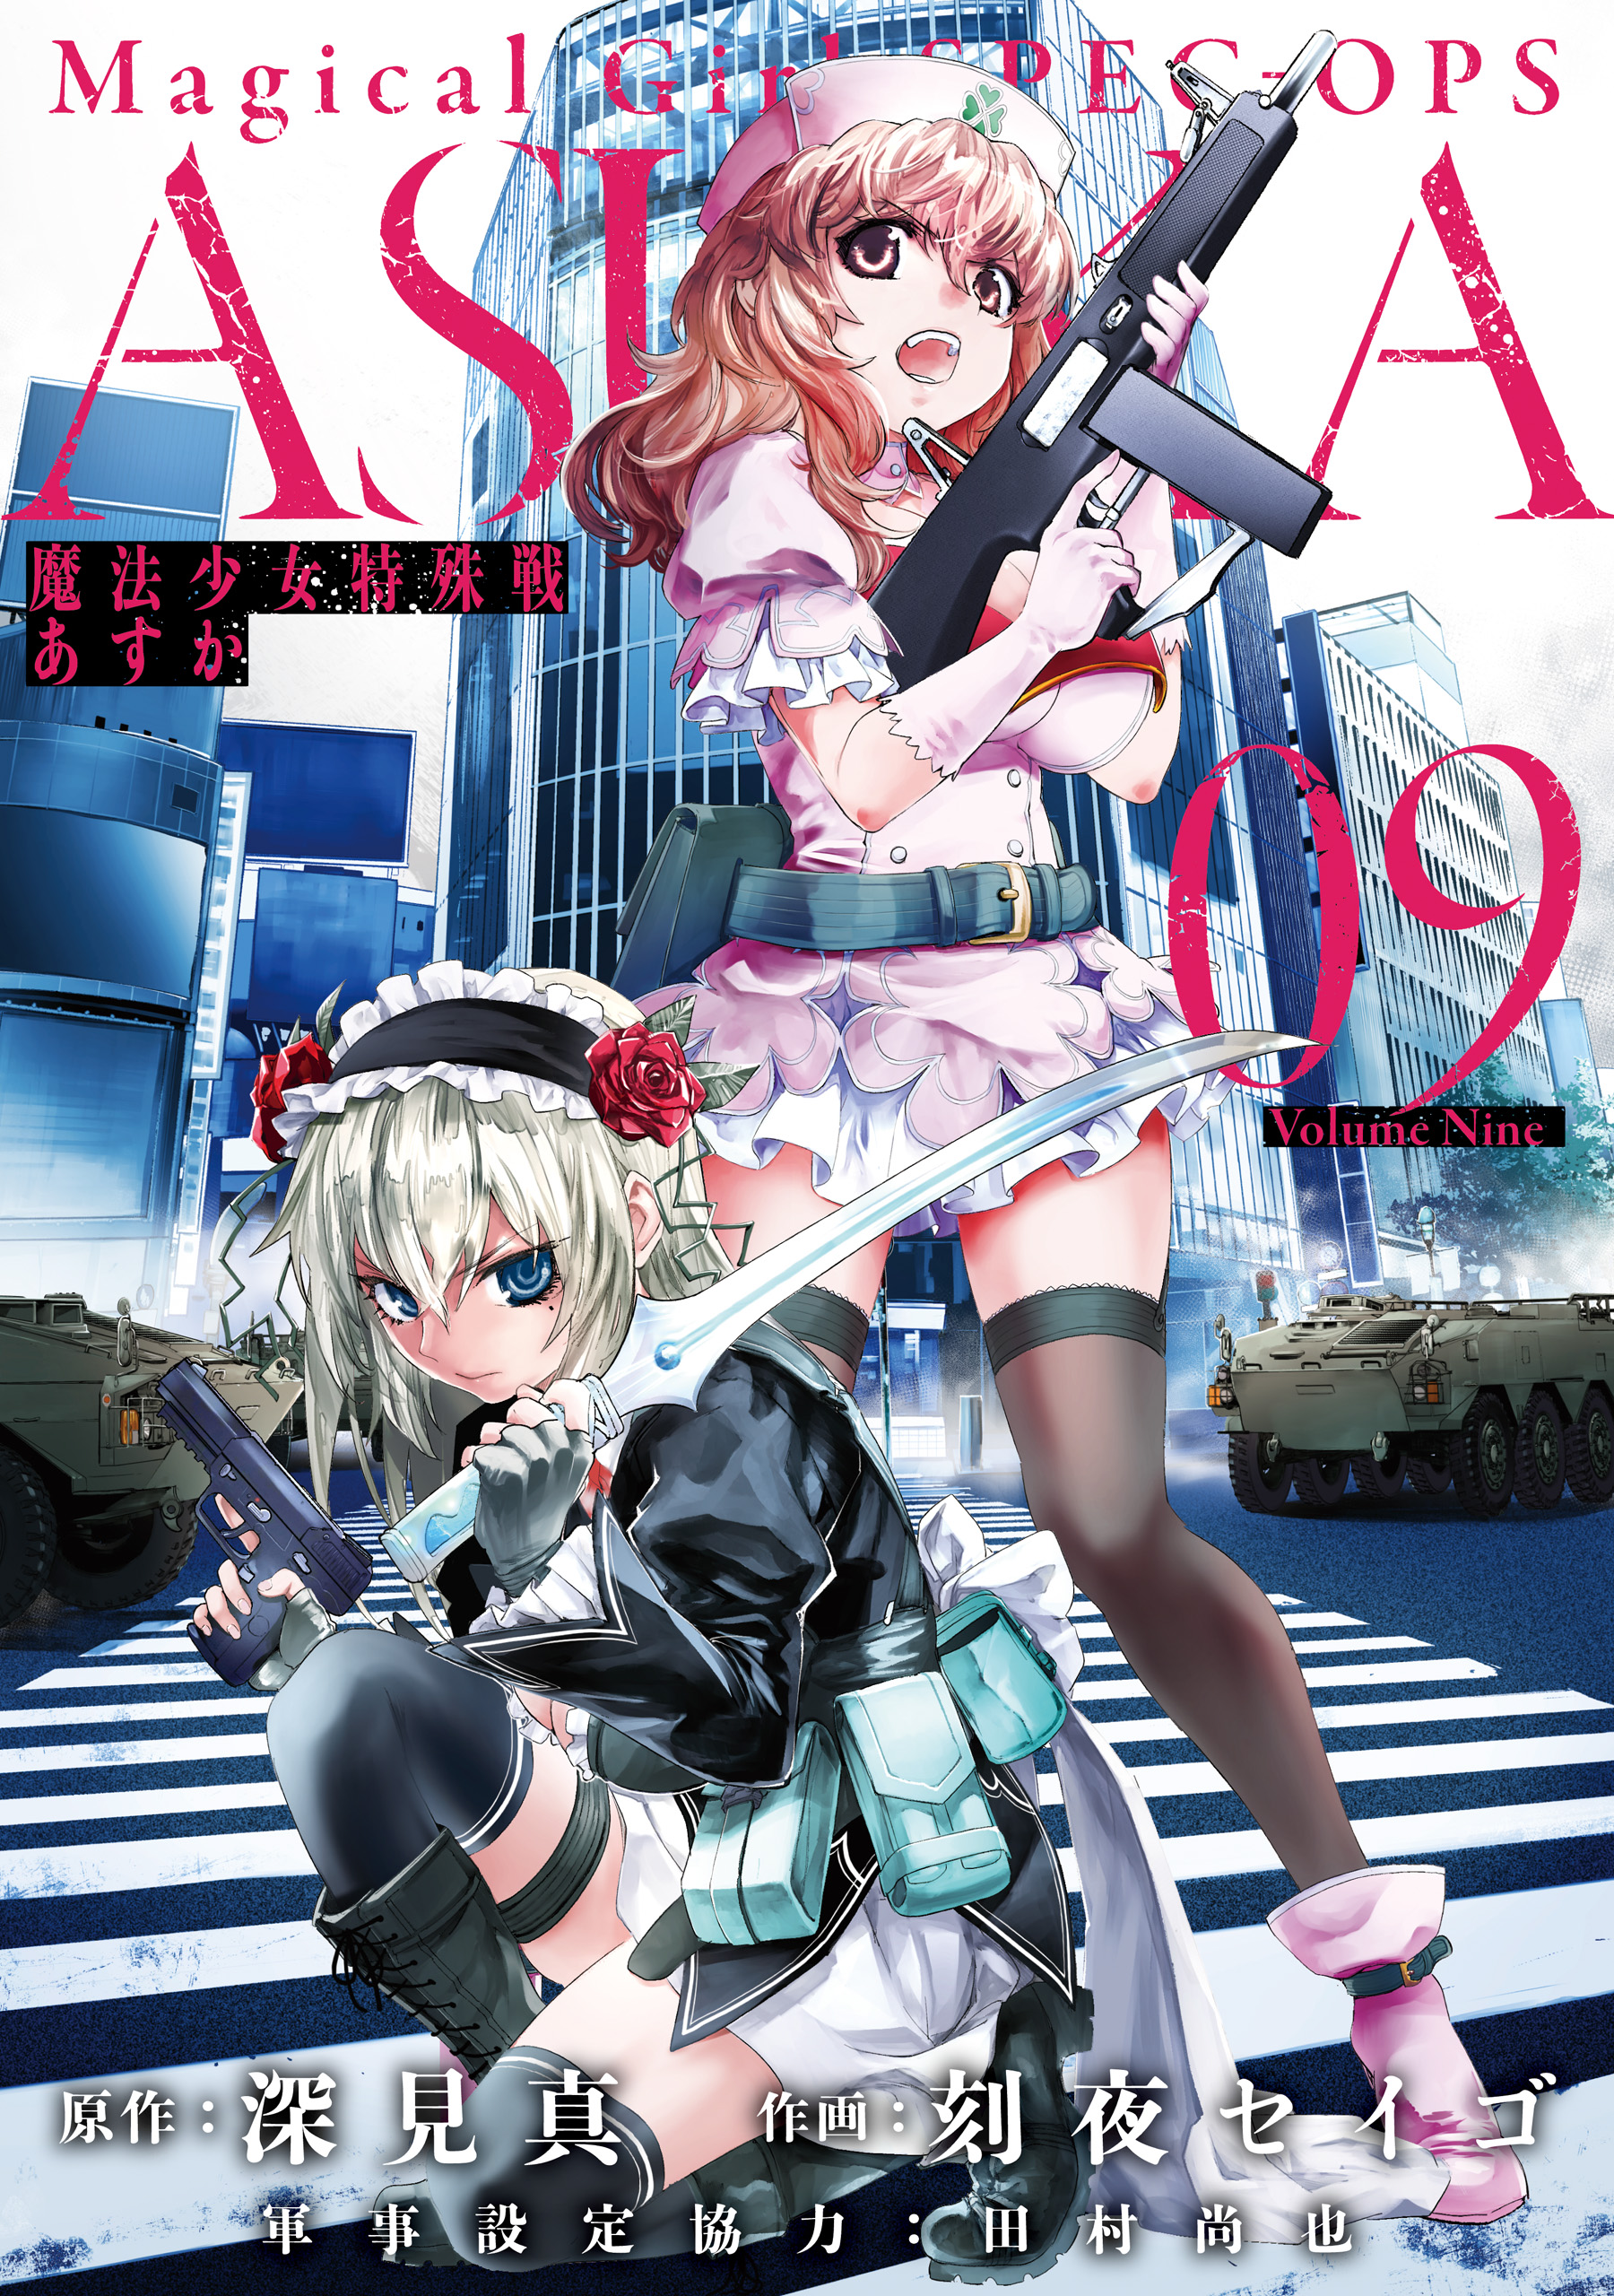 Mahou Shoujo Tokushuusen Asuka (Manga) en VF